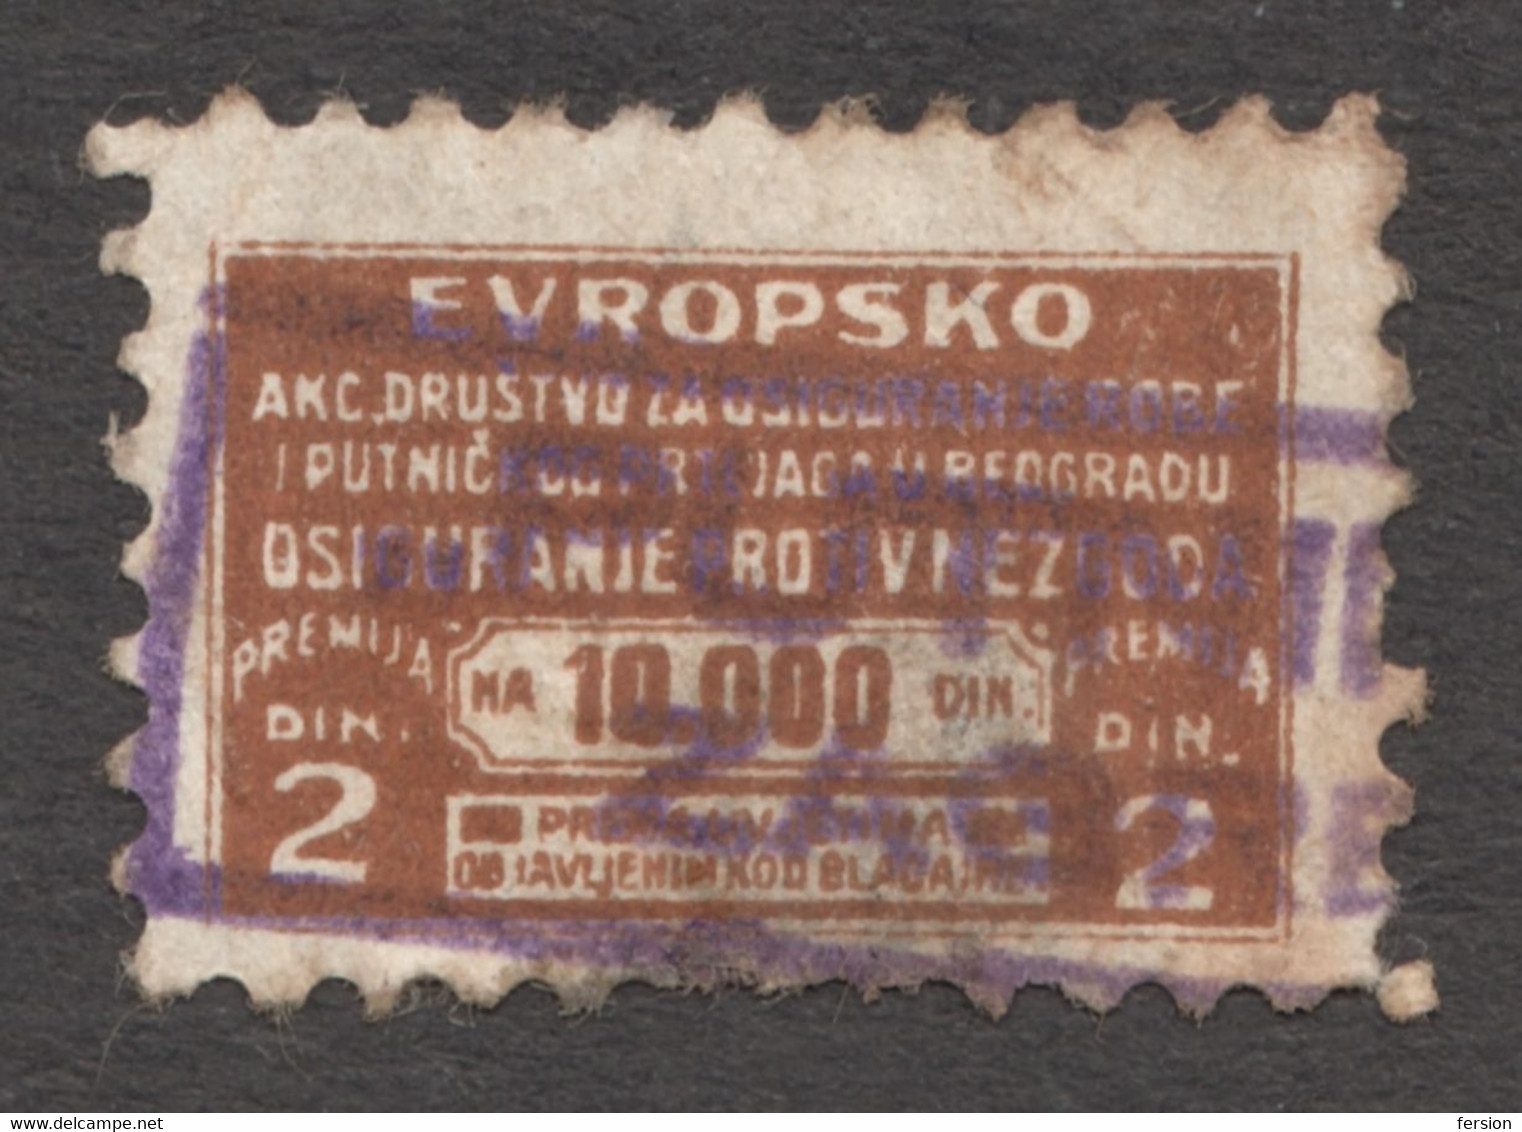 Travel - Holiday  / Railway Train Baggage Insurance STAMP / 1930 Croatia Zagreb Postmark Revenue Tax Label Vignette - Service